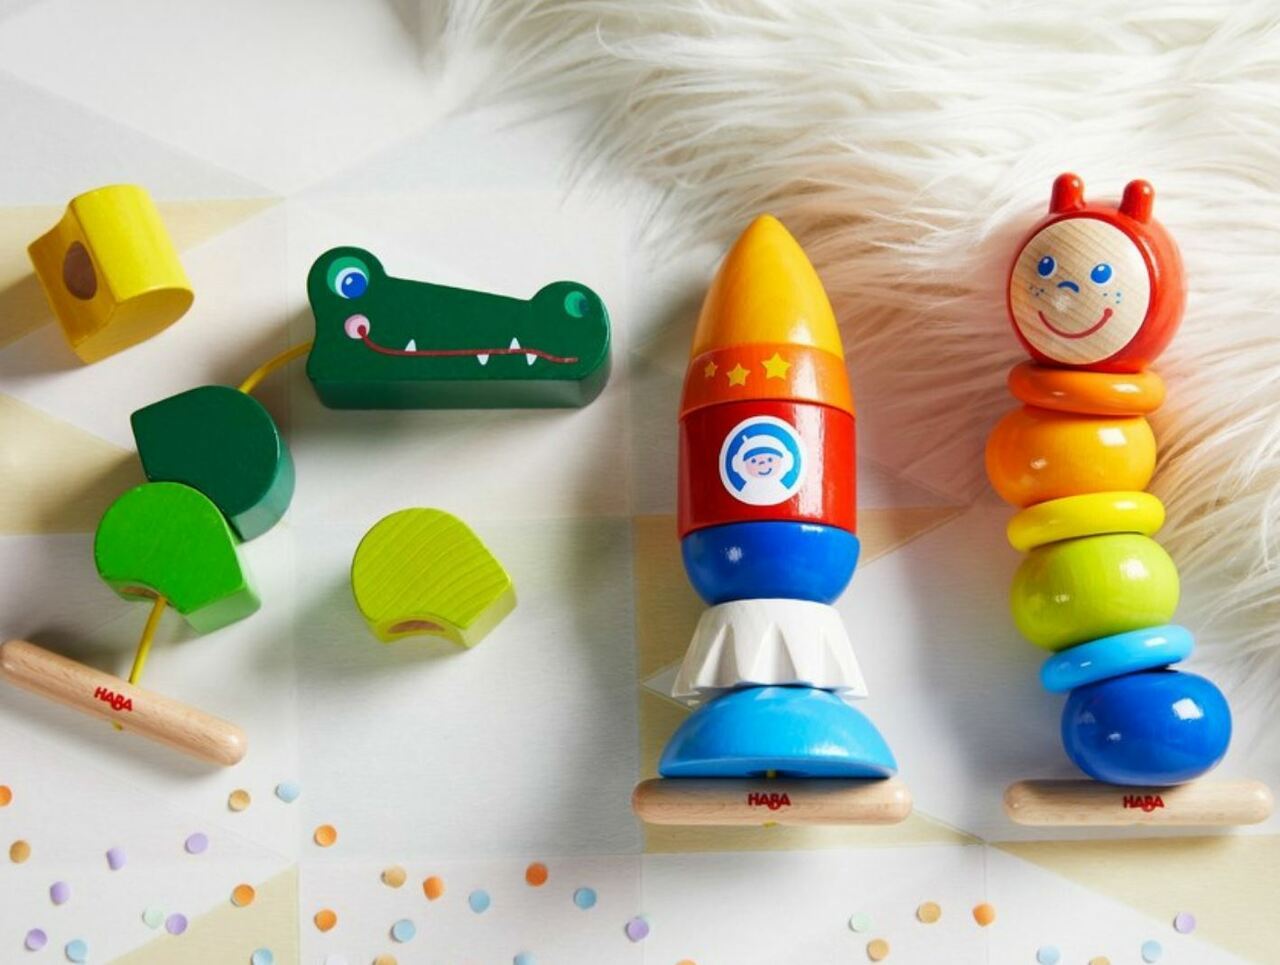 HABA Rocket Threading Game - Wood Wood Toys Canada's Favourite Montessori Toy Store